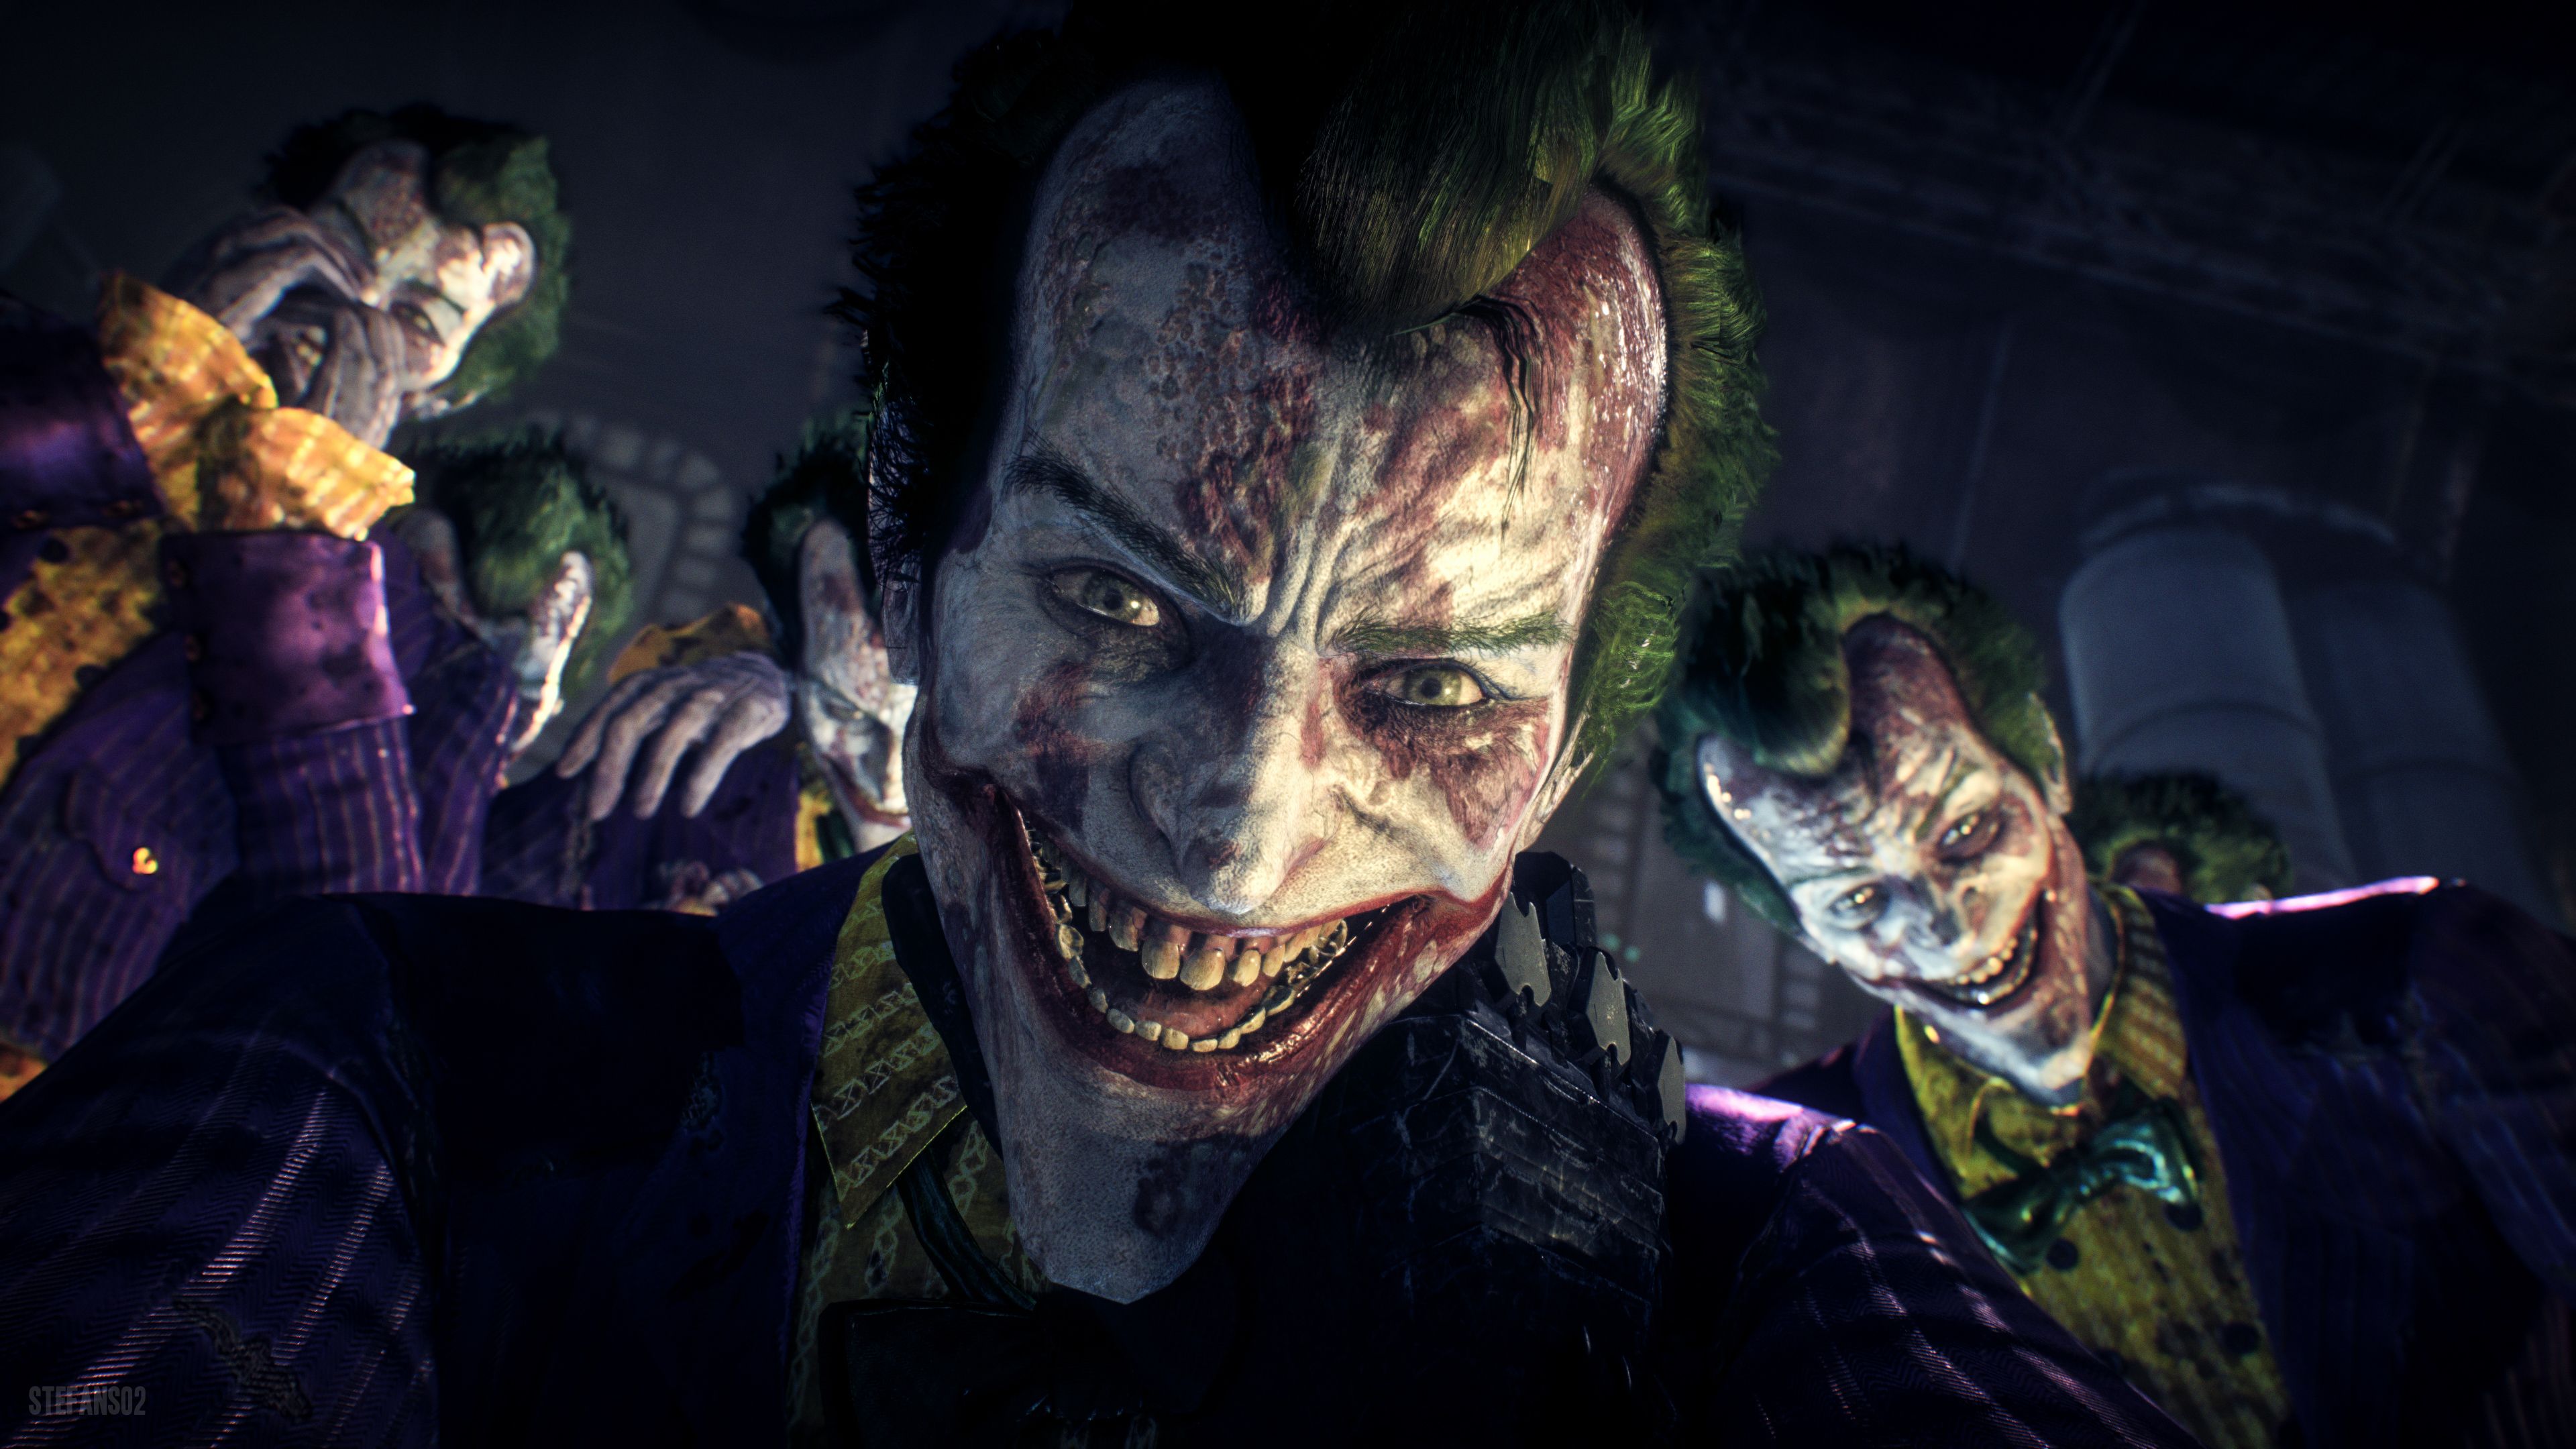 Joker Batman Arkham Knight, HD Games, 4k Wallpaper, Image, Background, Photo and Picture